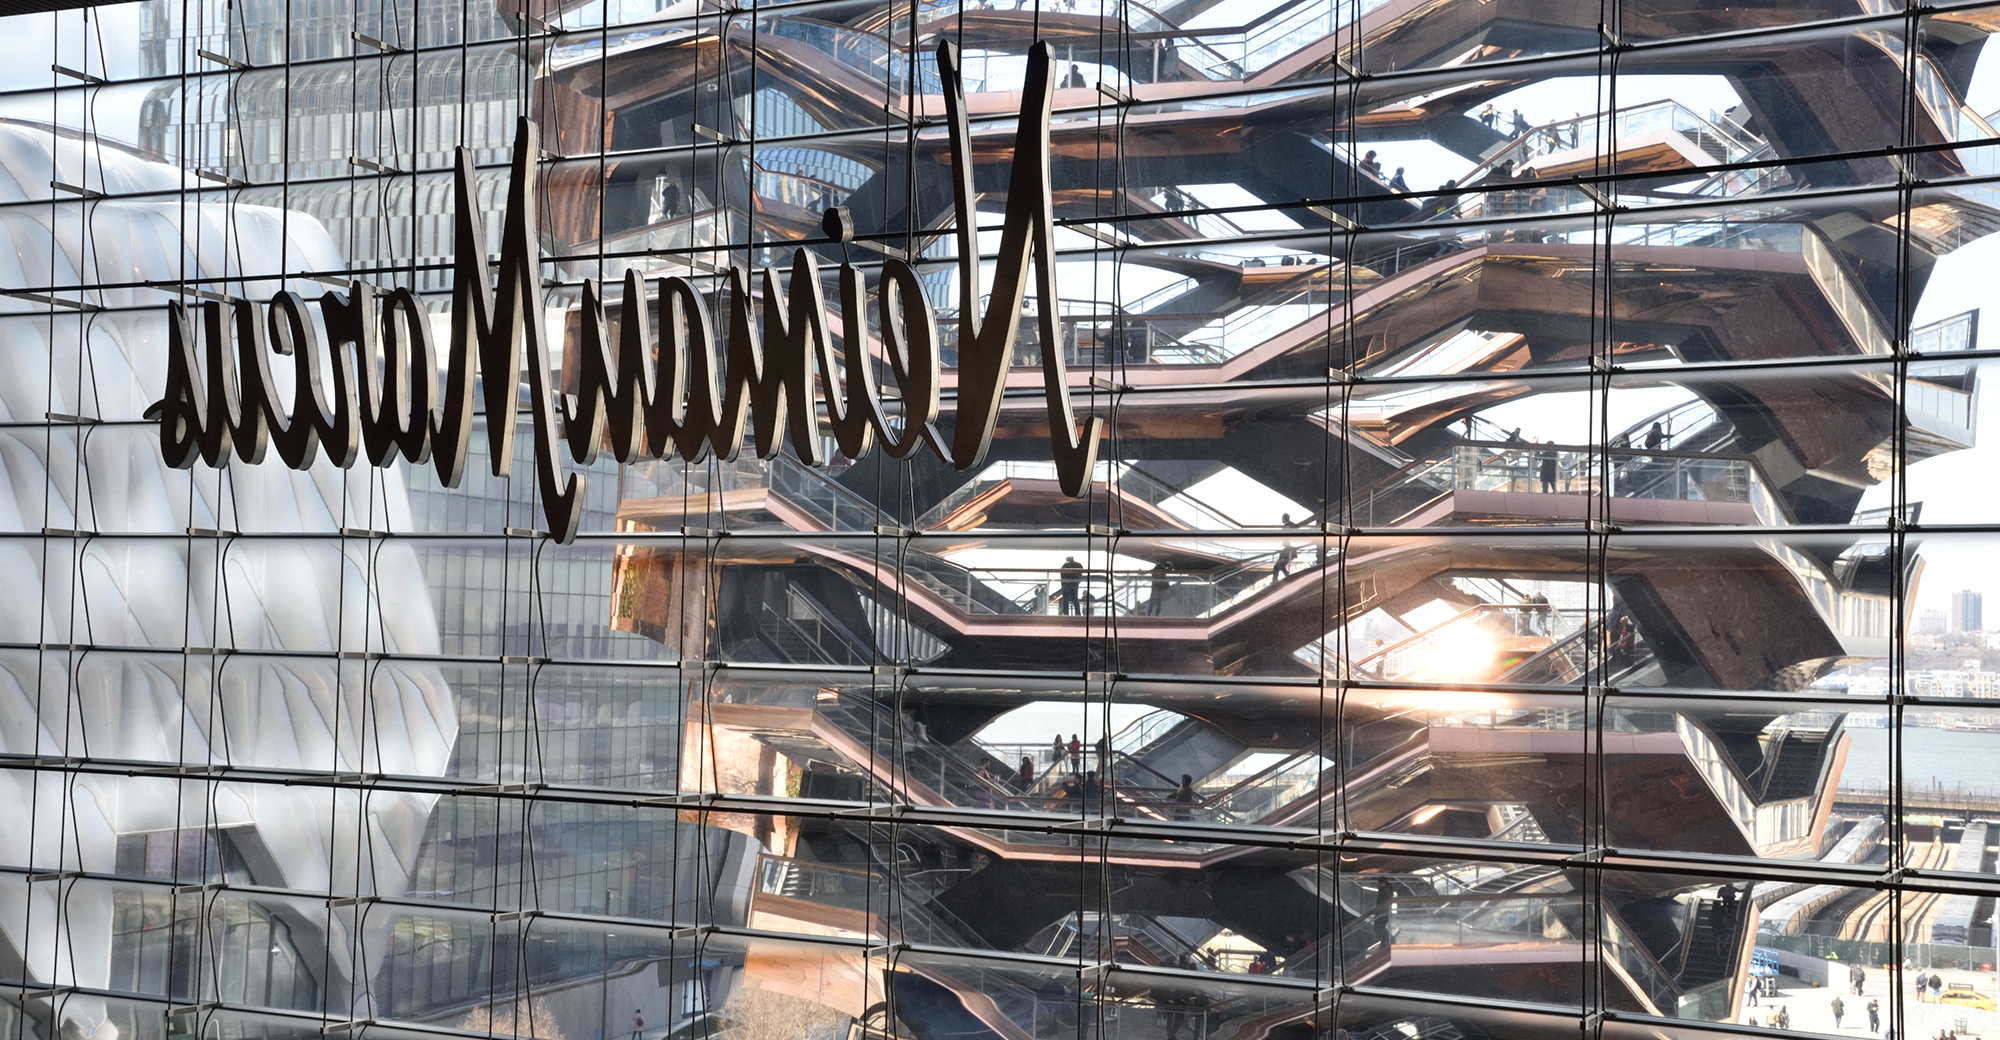 Neiman Marcus to Close Its Store at Manhattan's Hudson Yards - Bloomberg